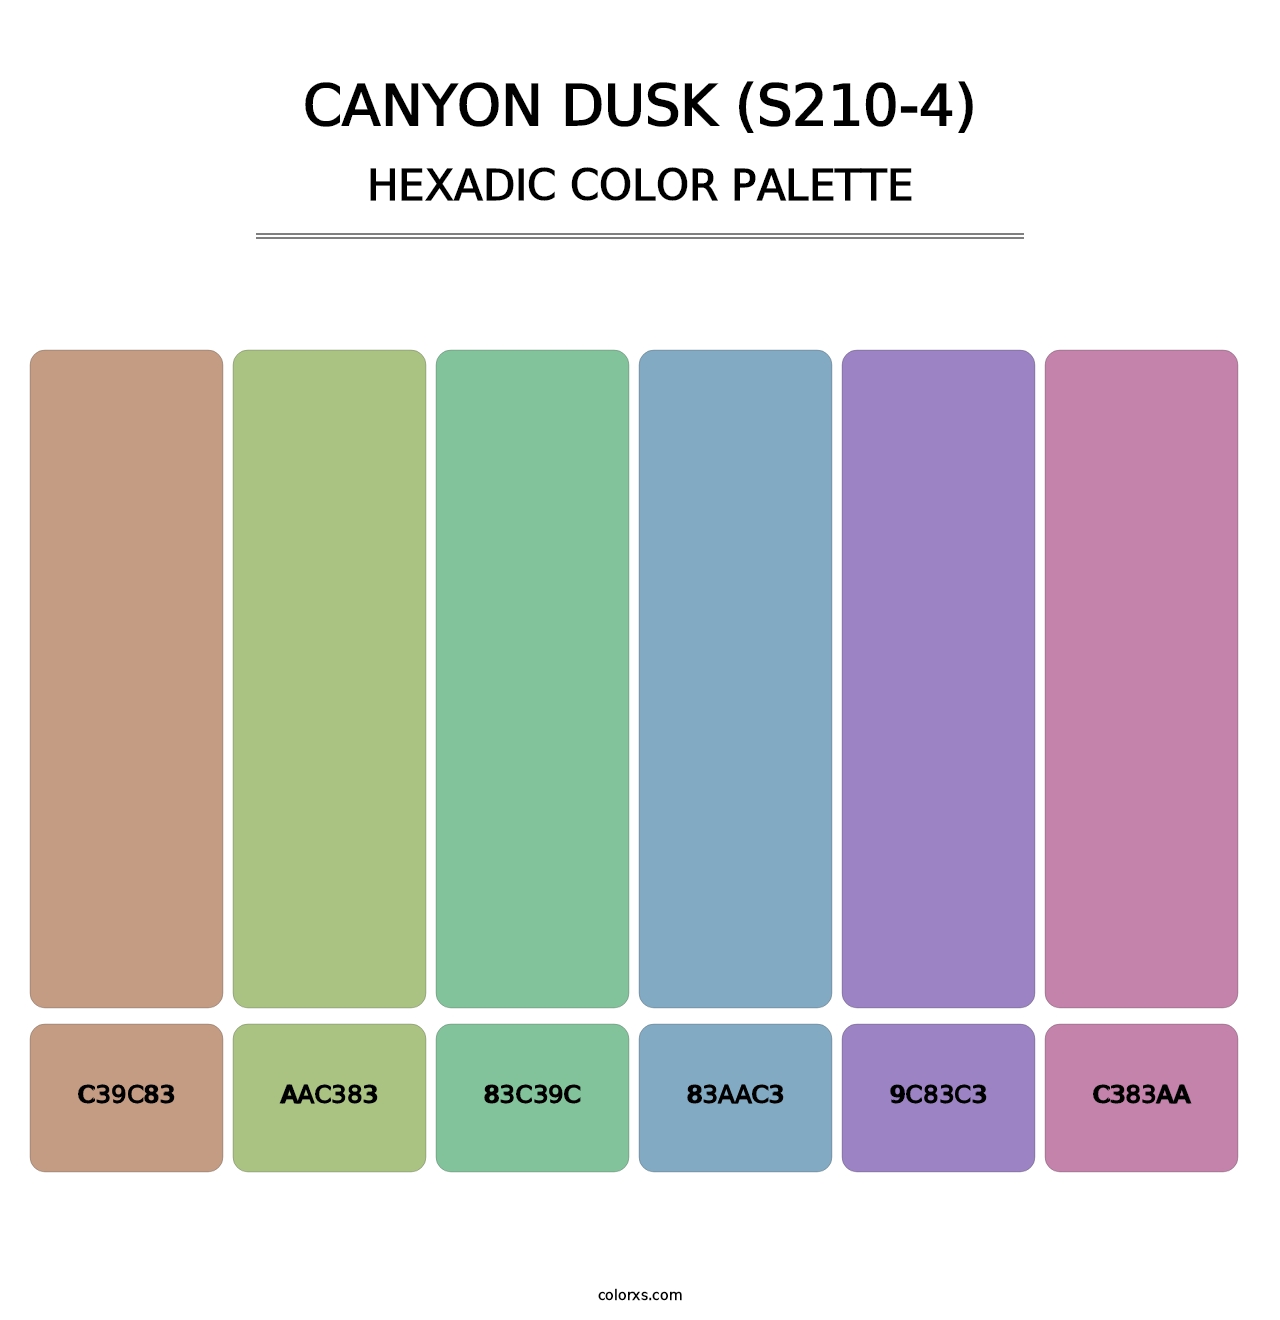 Canyon Dusk (S210-4) - Hexadic Color Palette